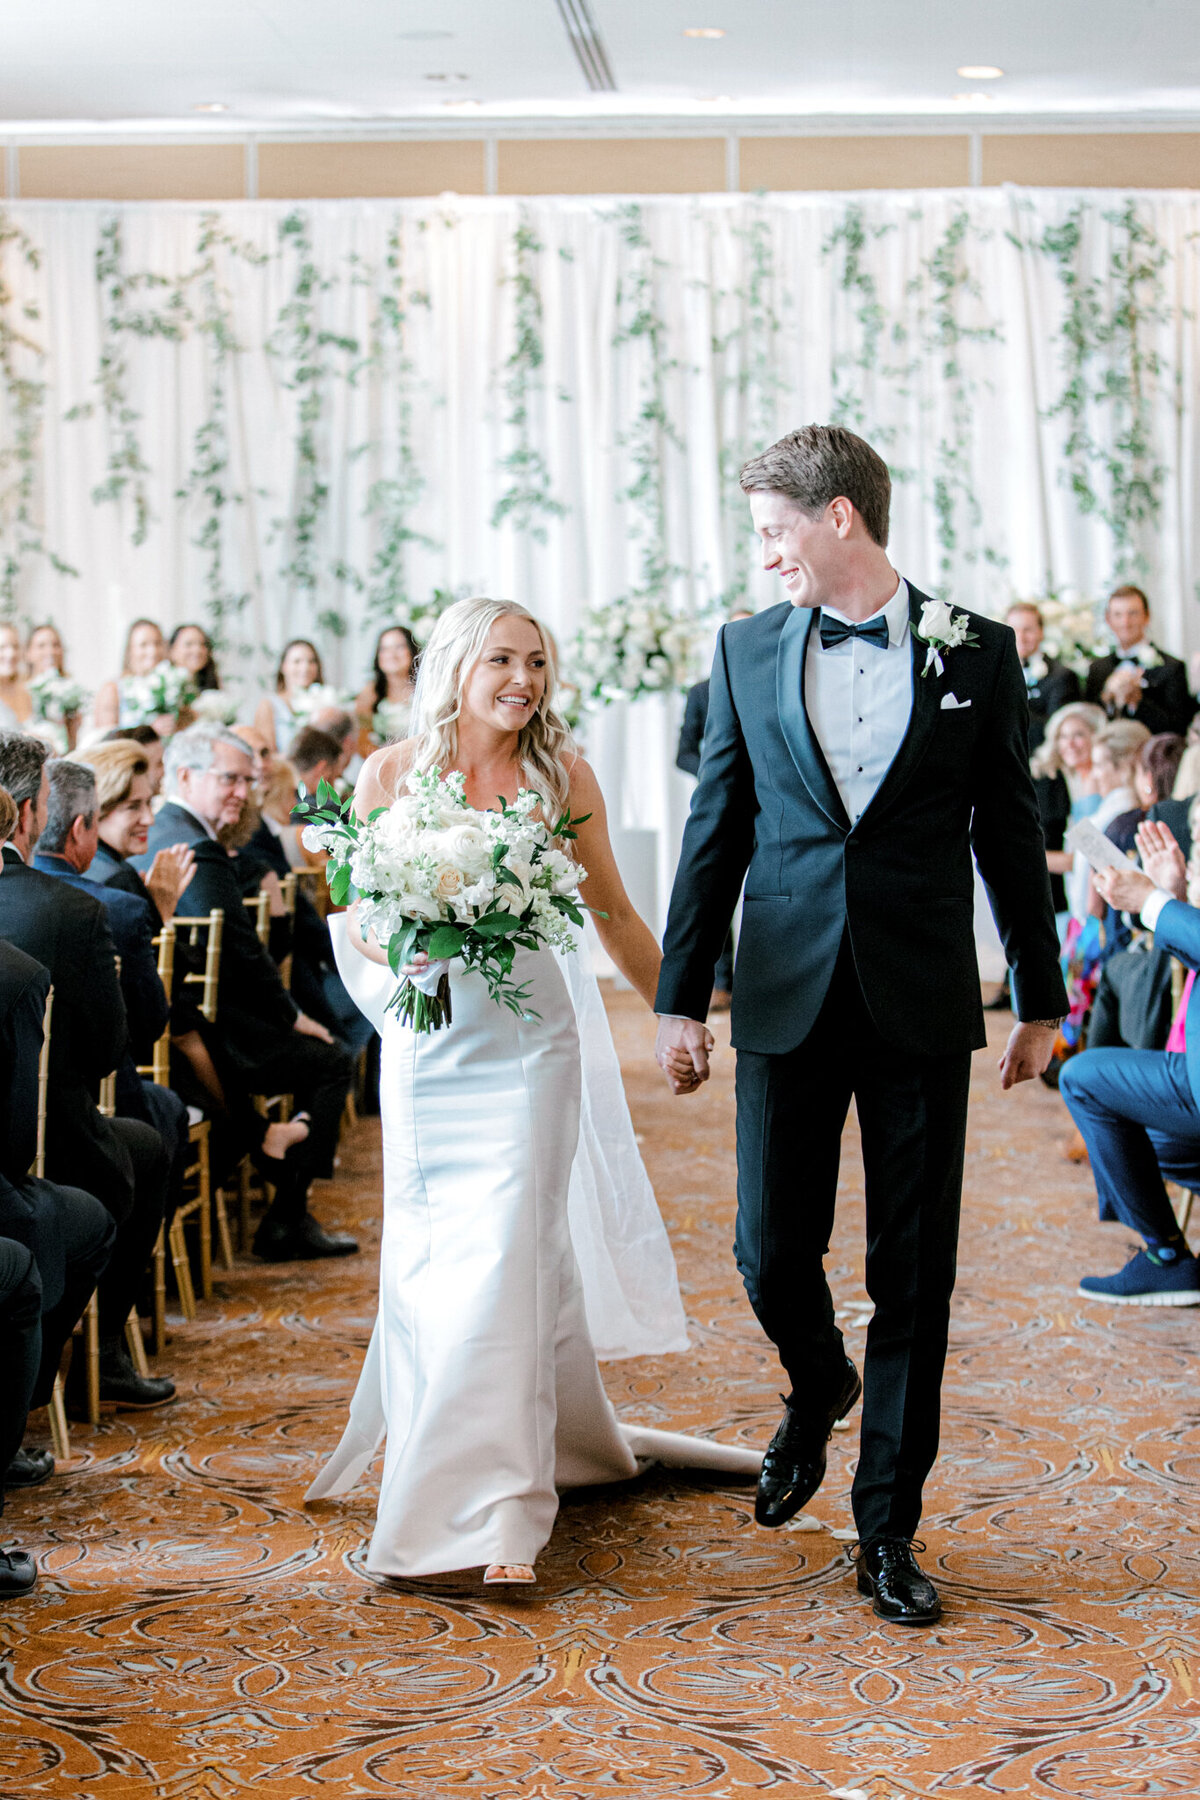 Madison & Michael's Wedding at Union Station | Dallas Wedding Photographer | Sami Kathryn Photography-133